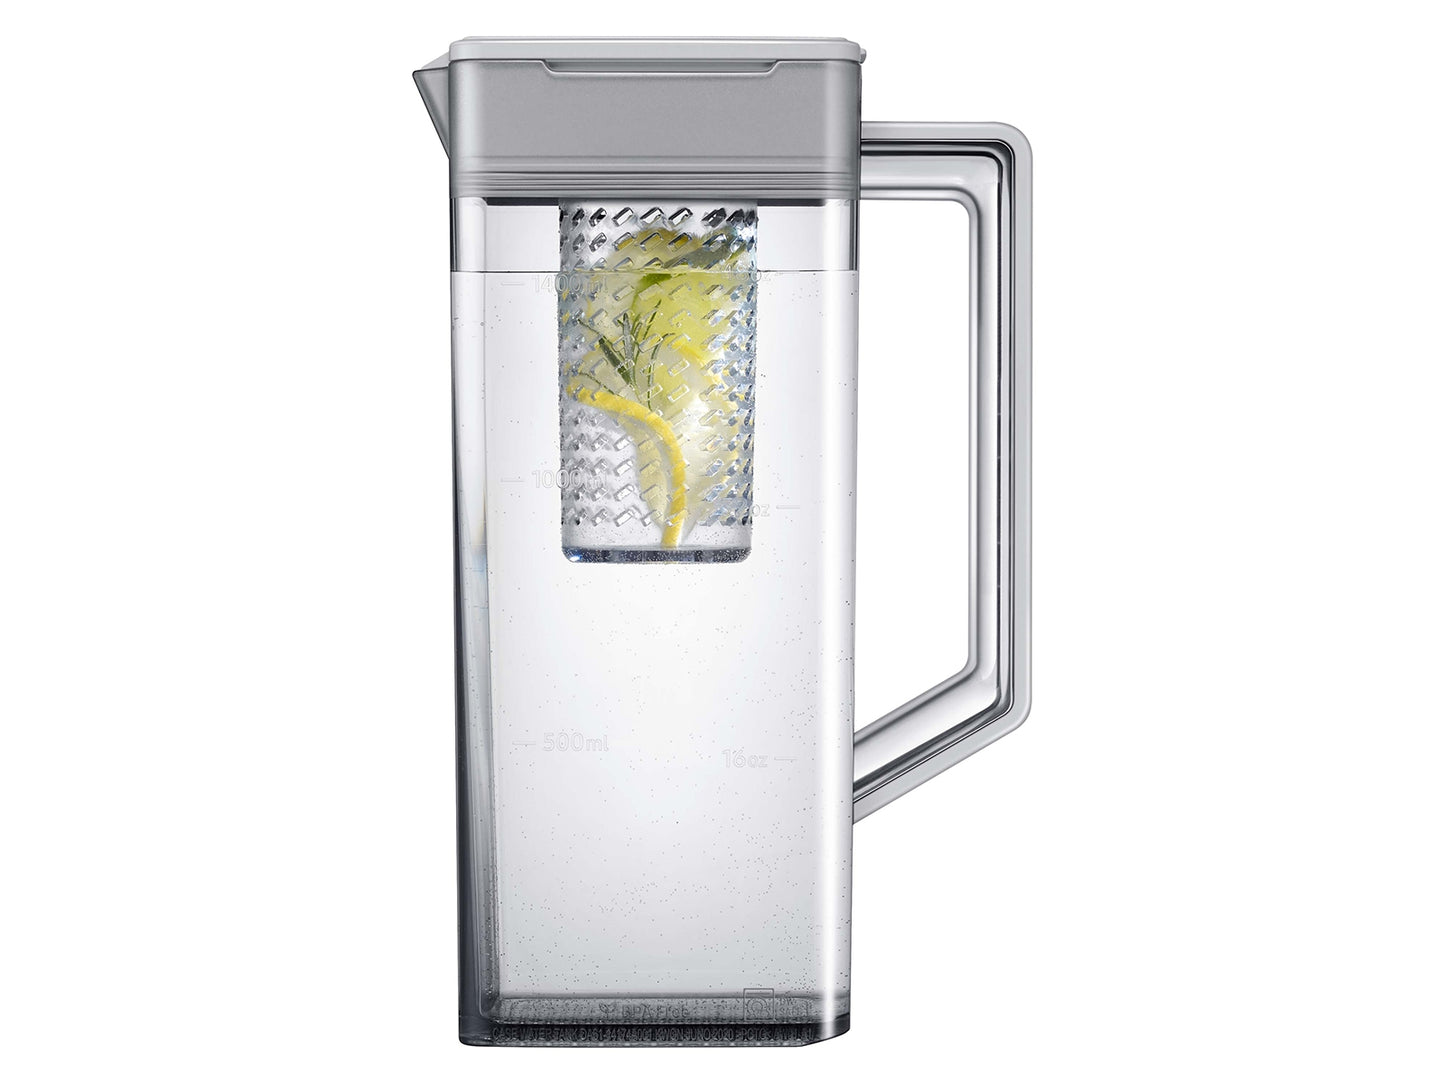 Samsung Bespoke 4-Door French Door Refrigerator (29 cu. ft.) with AutoFill Water Pitcher in Stainless Steel